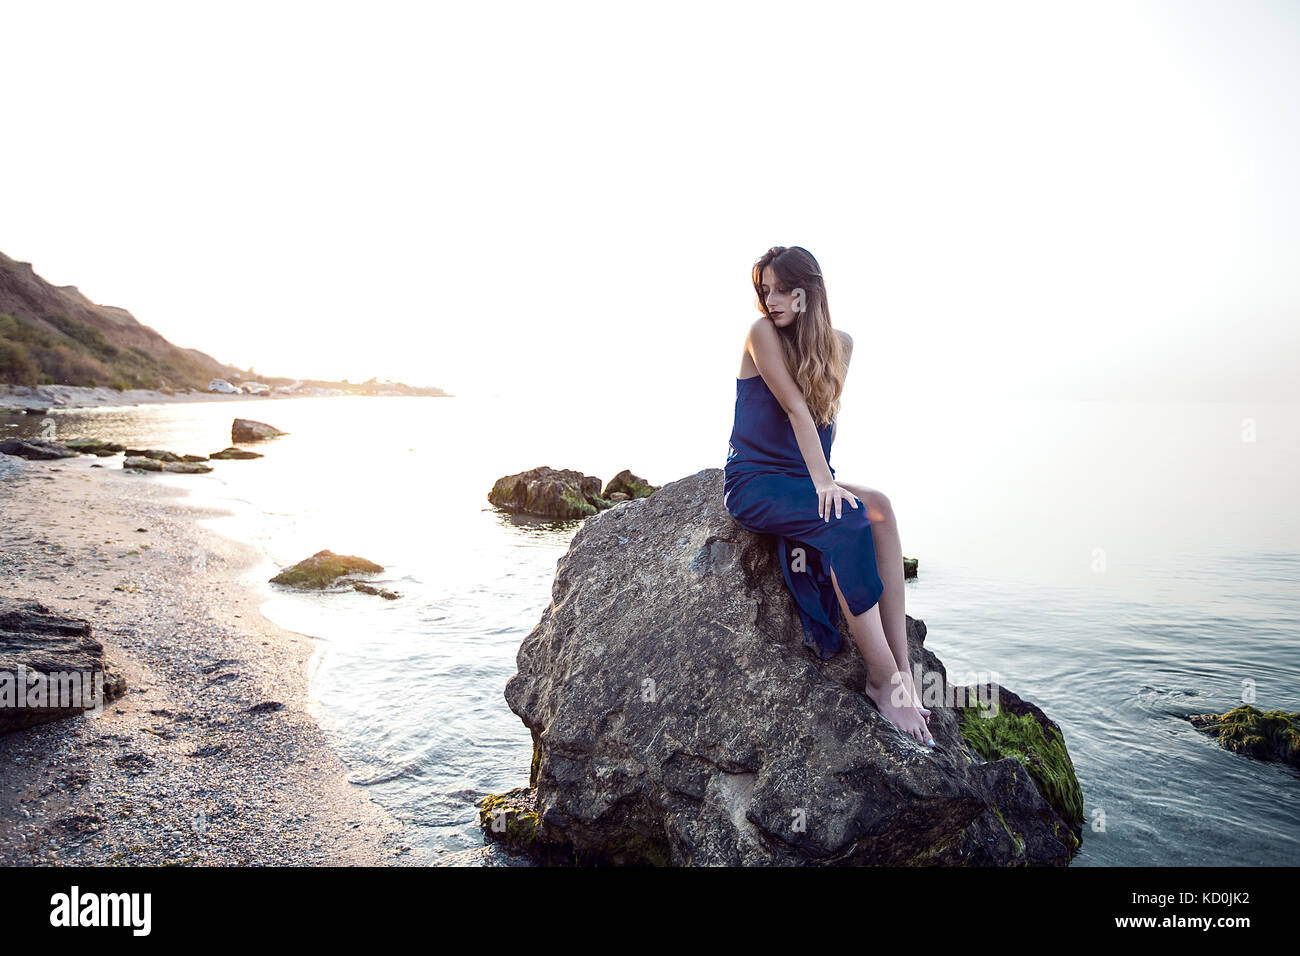 Young woman sitting on beach rock, Odessa, Ukraine Stock Photo